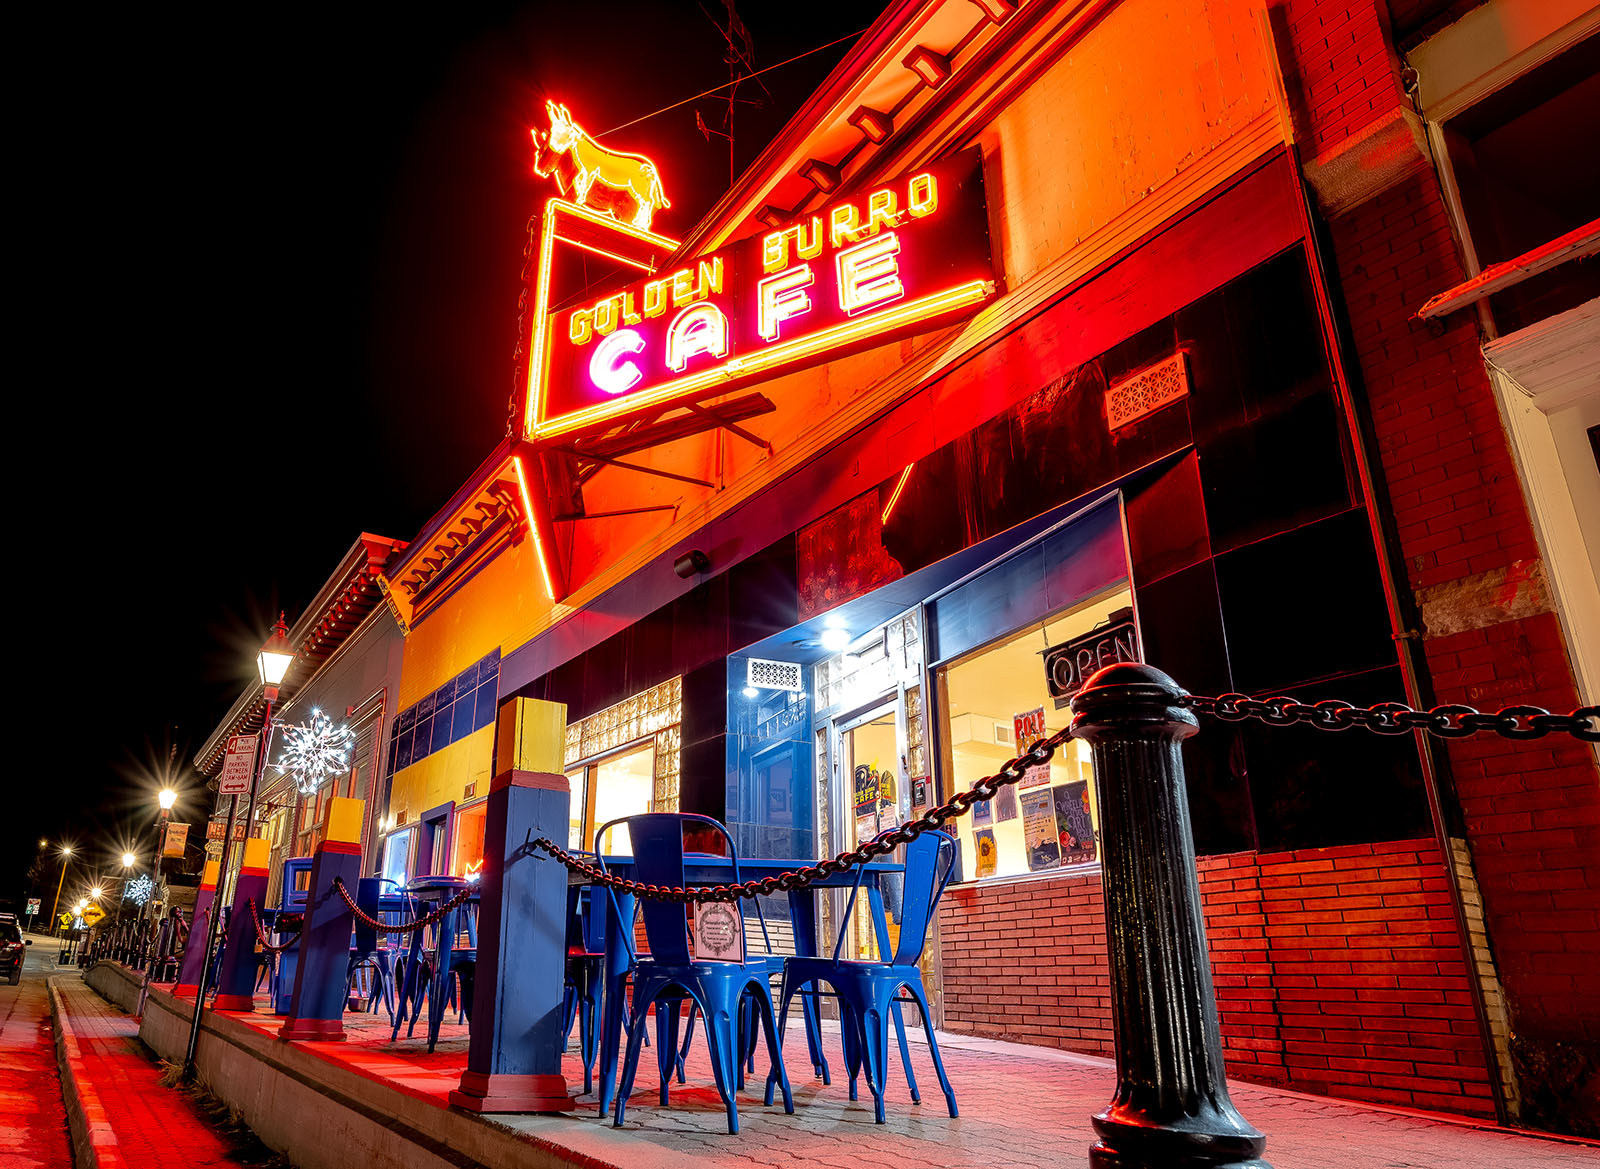 Historic Golden Burro Cafe at night